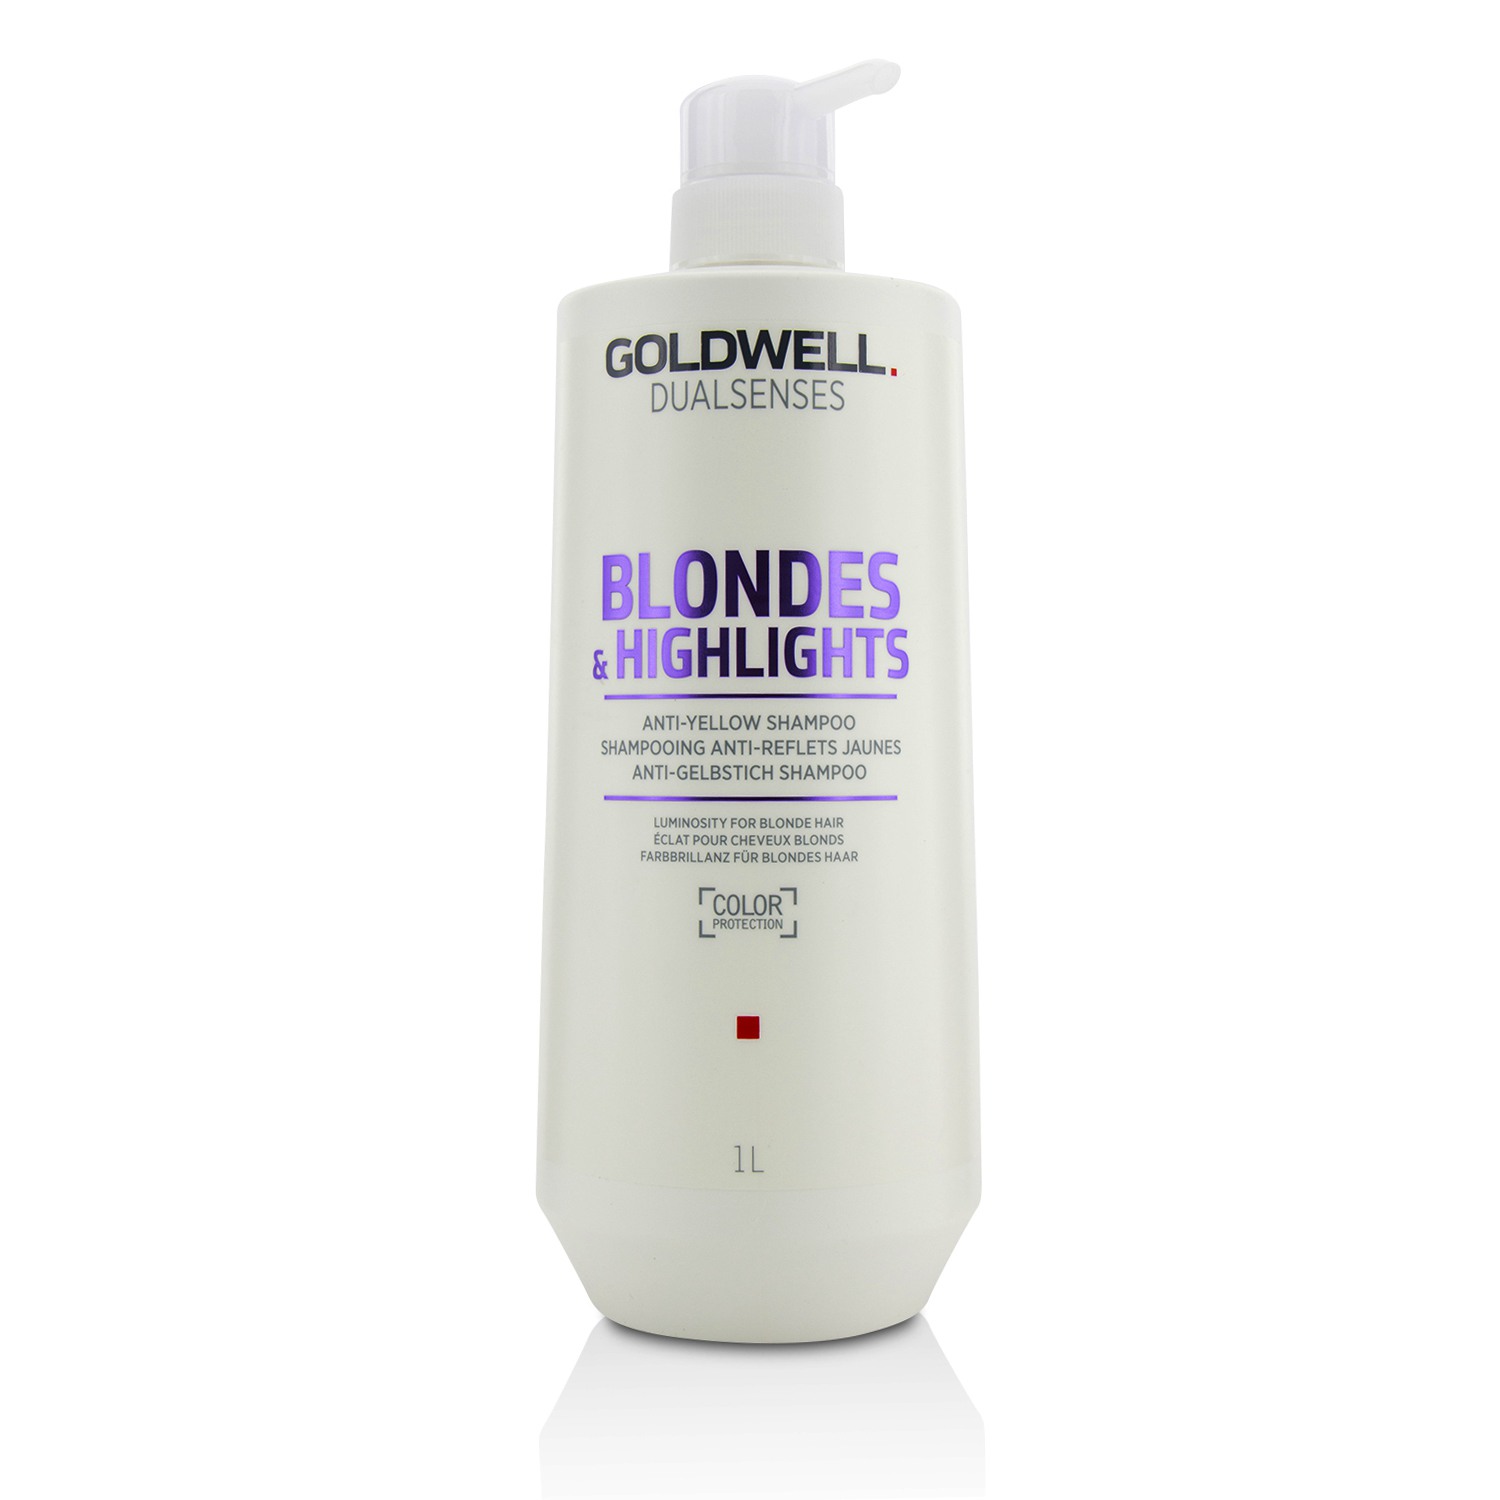 Dual Senses Blondes & Highlights Anti-Yellow Shampoo (Luminosity For Blonde Hair) Goldwell Image